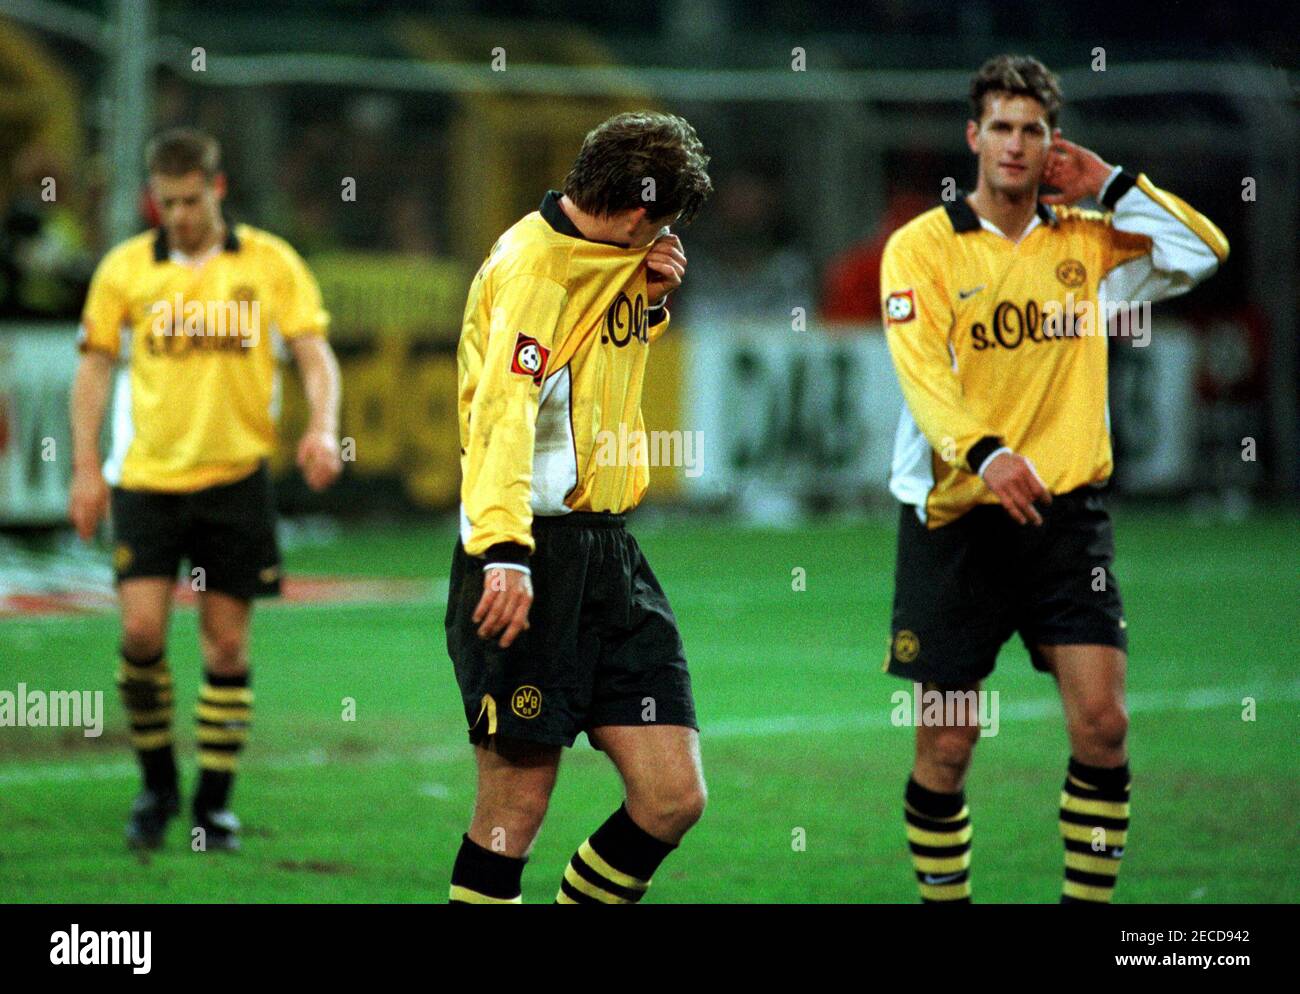 Dortmund Germany 7.11.1999, Football: Bundesliga Season 1999/2000,  Borussia Dortmund (BVB, yellow) vs Bayer 04 Leverkusen (B04, red) 1:1 - from left: RICKEN, WOERNS and HERRLICH (BVB) Stock Photo